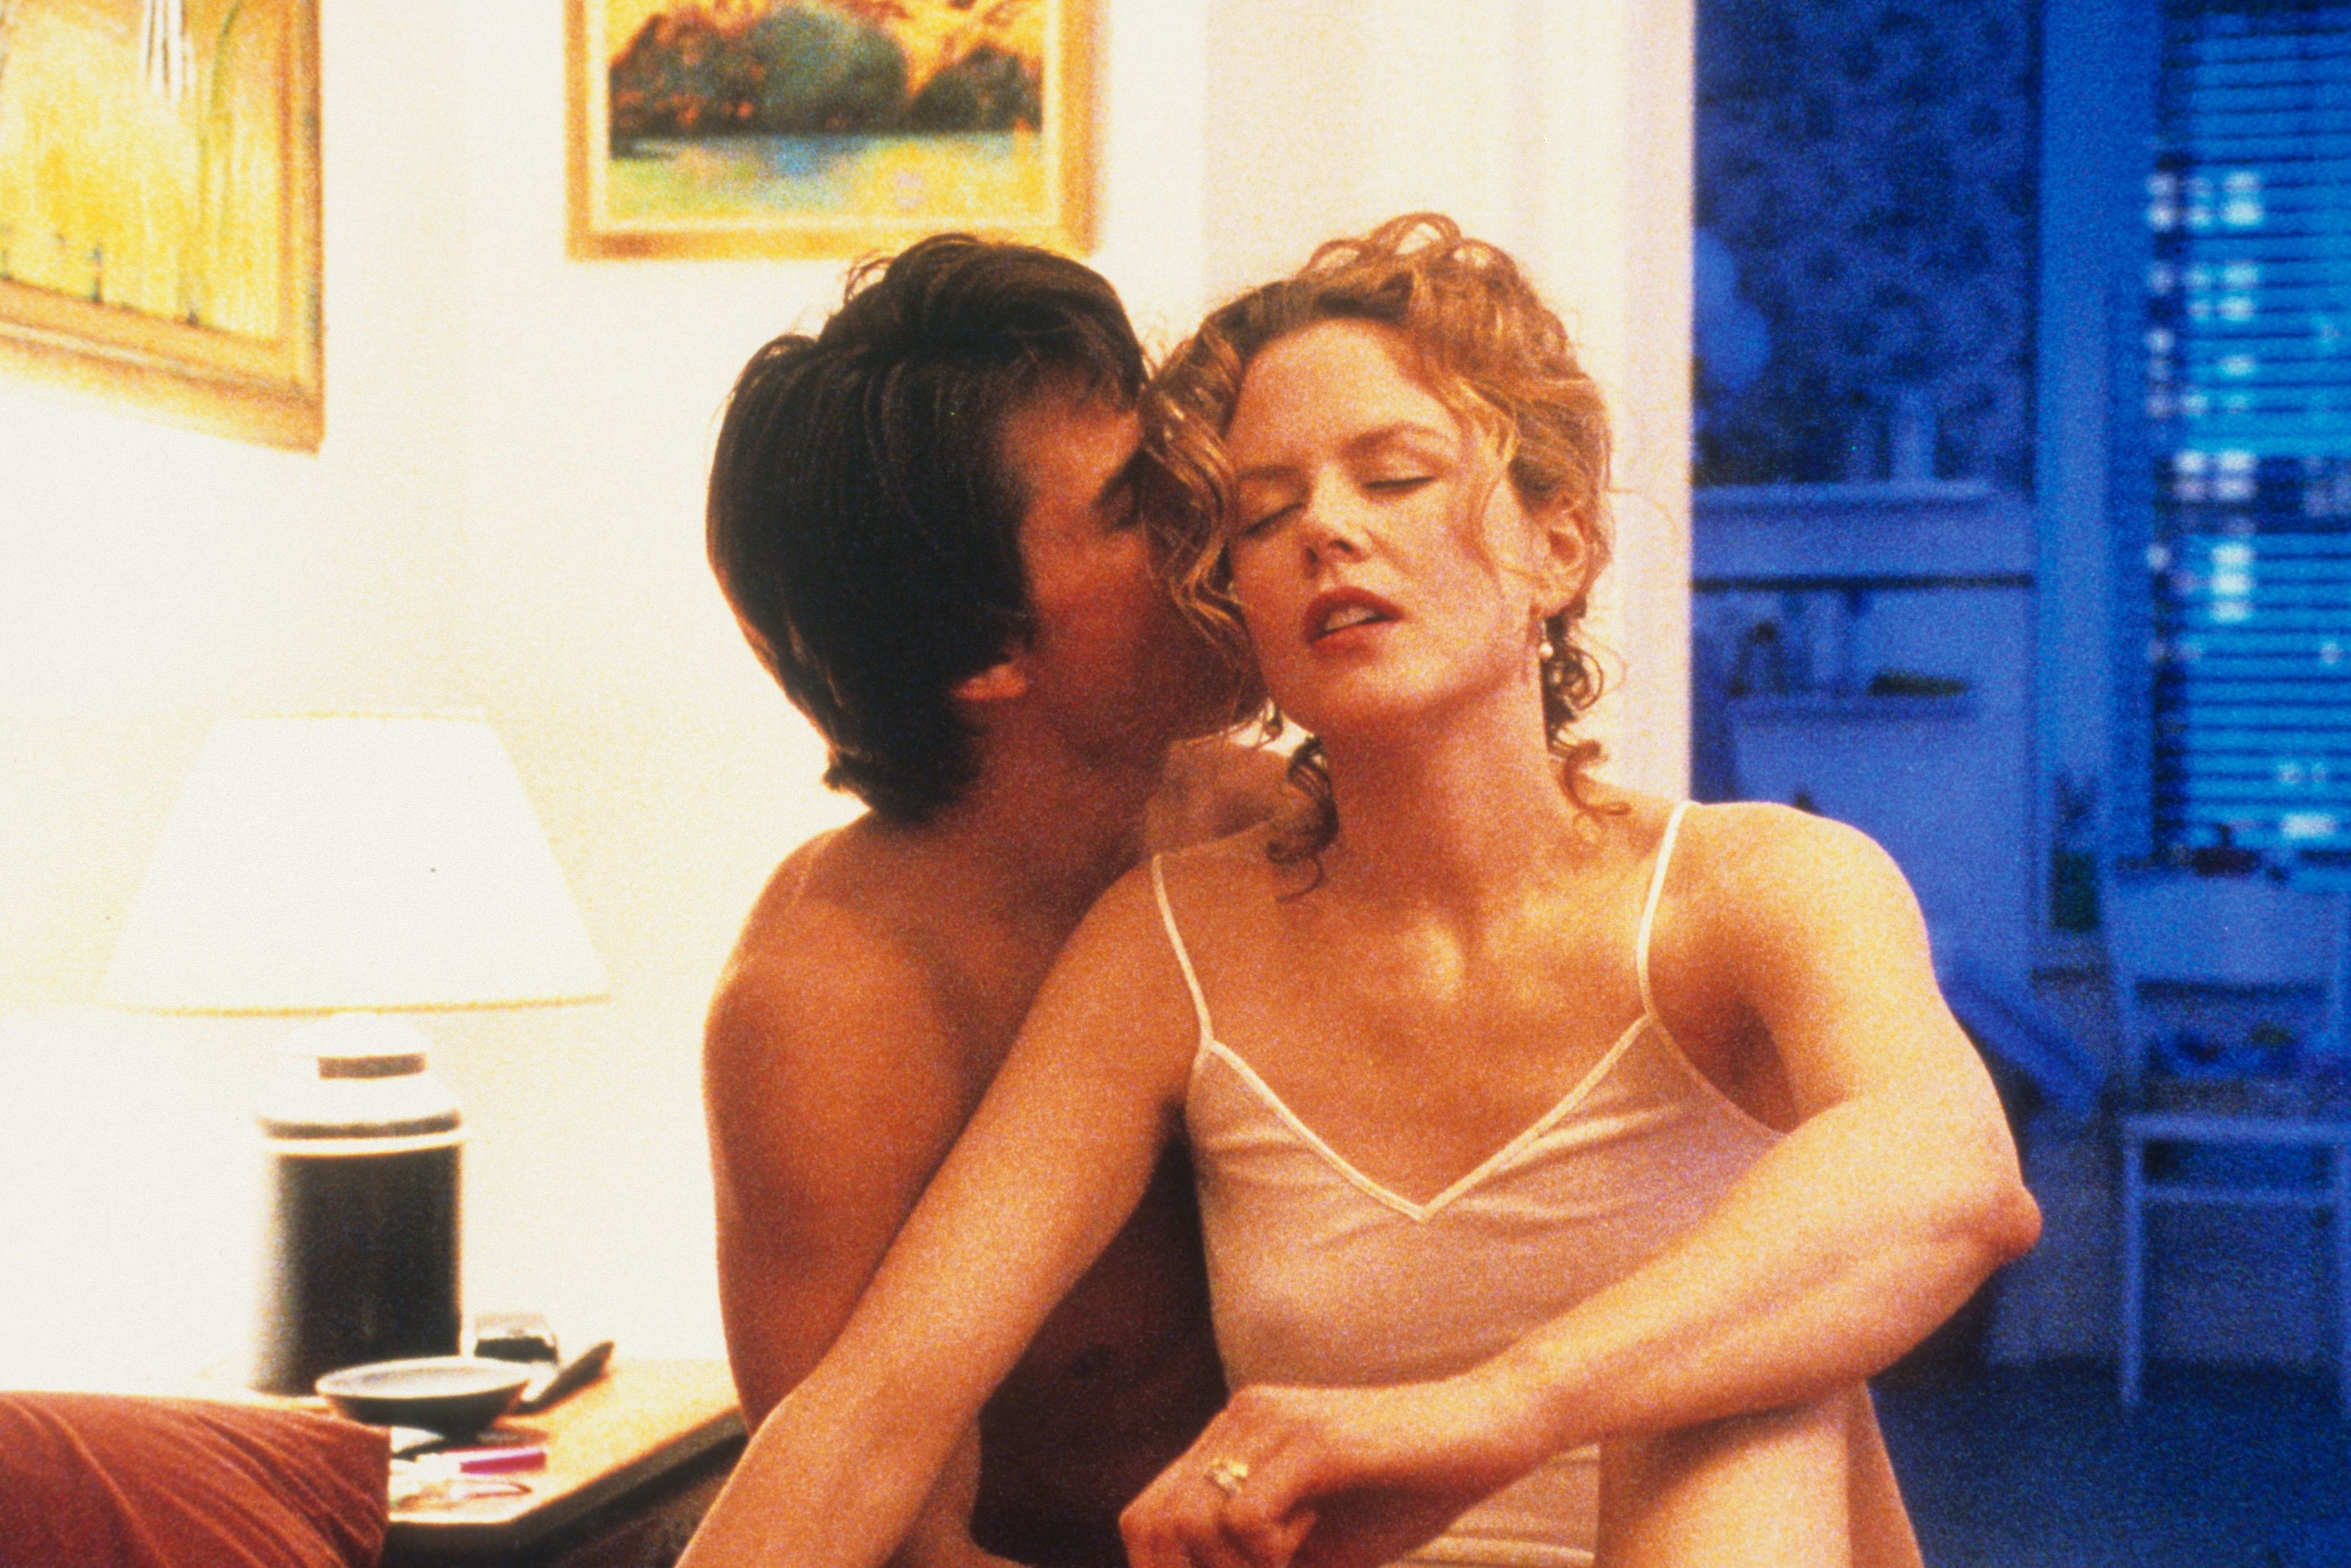 10 Best Movie Sex Scenes of All Time - Sexiest Film Sex Scenes